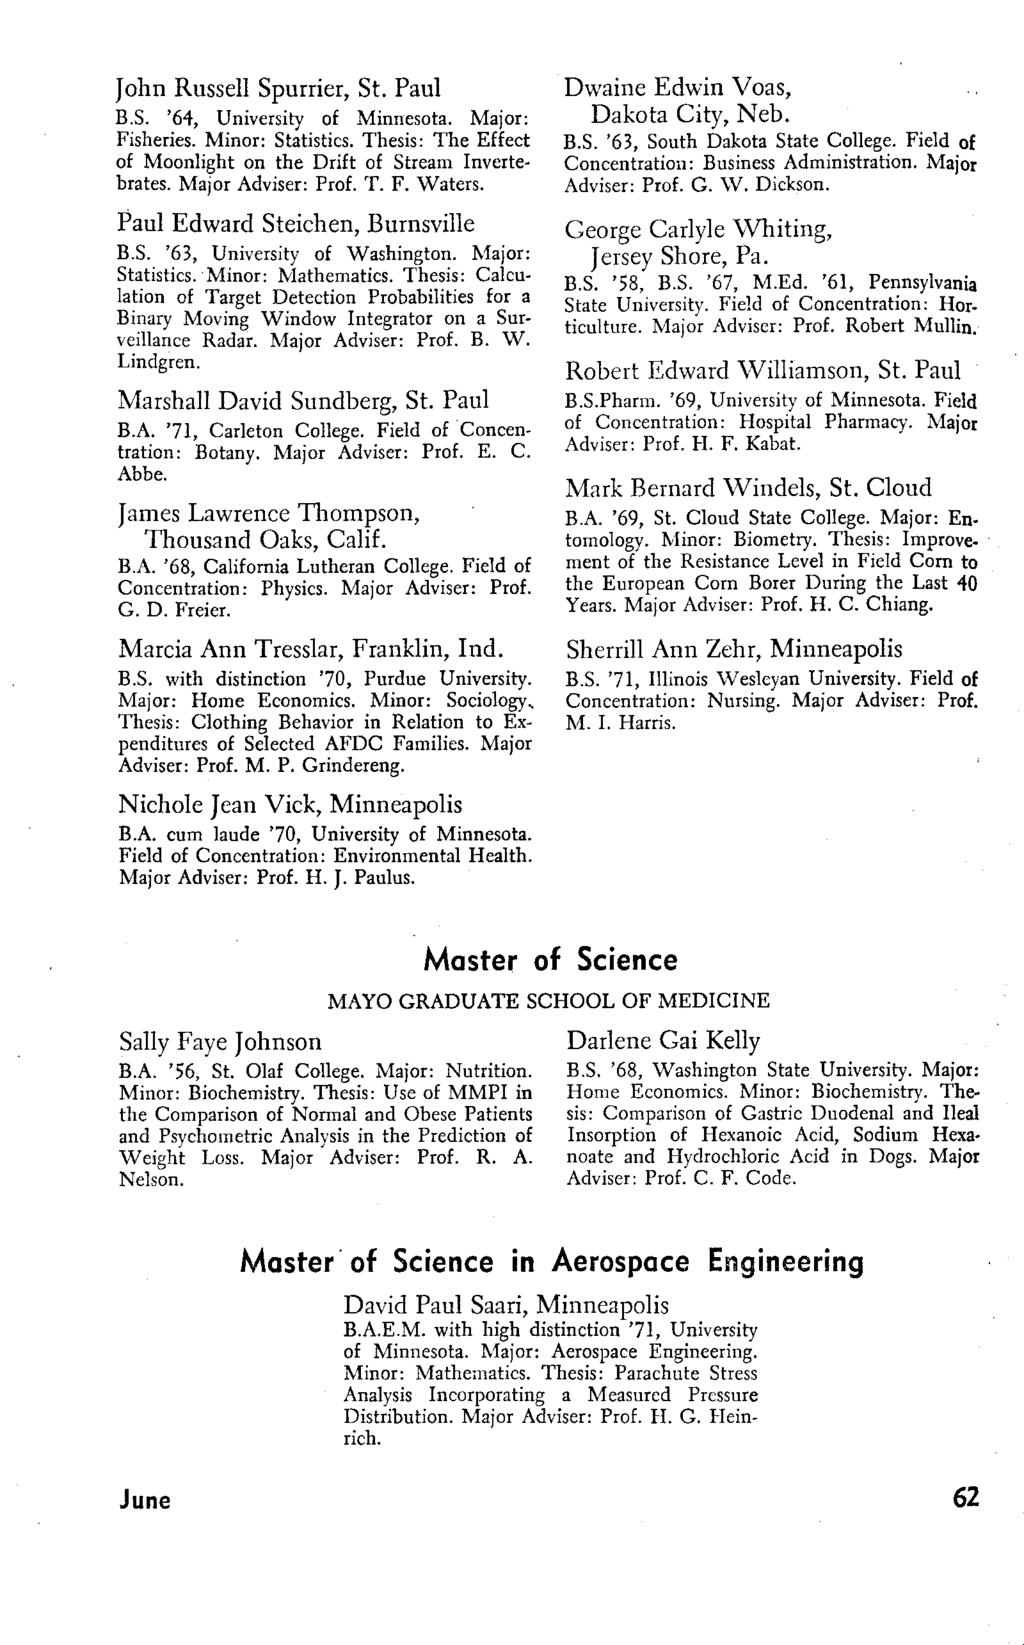 John Russell Spurrier, St. Paul B.S. '64, University of Minnesota. Major: Fisheries. Minor: Statistics. Thesis: The Effect of Moonlight on the Drift of Stream Invertebrates. Major Adviser: Prof. T. F. Waters.